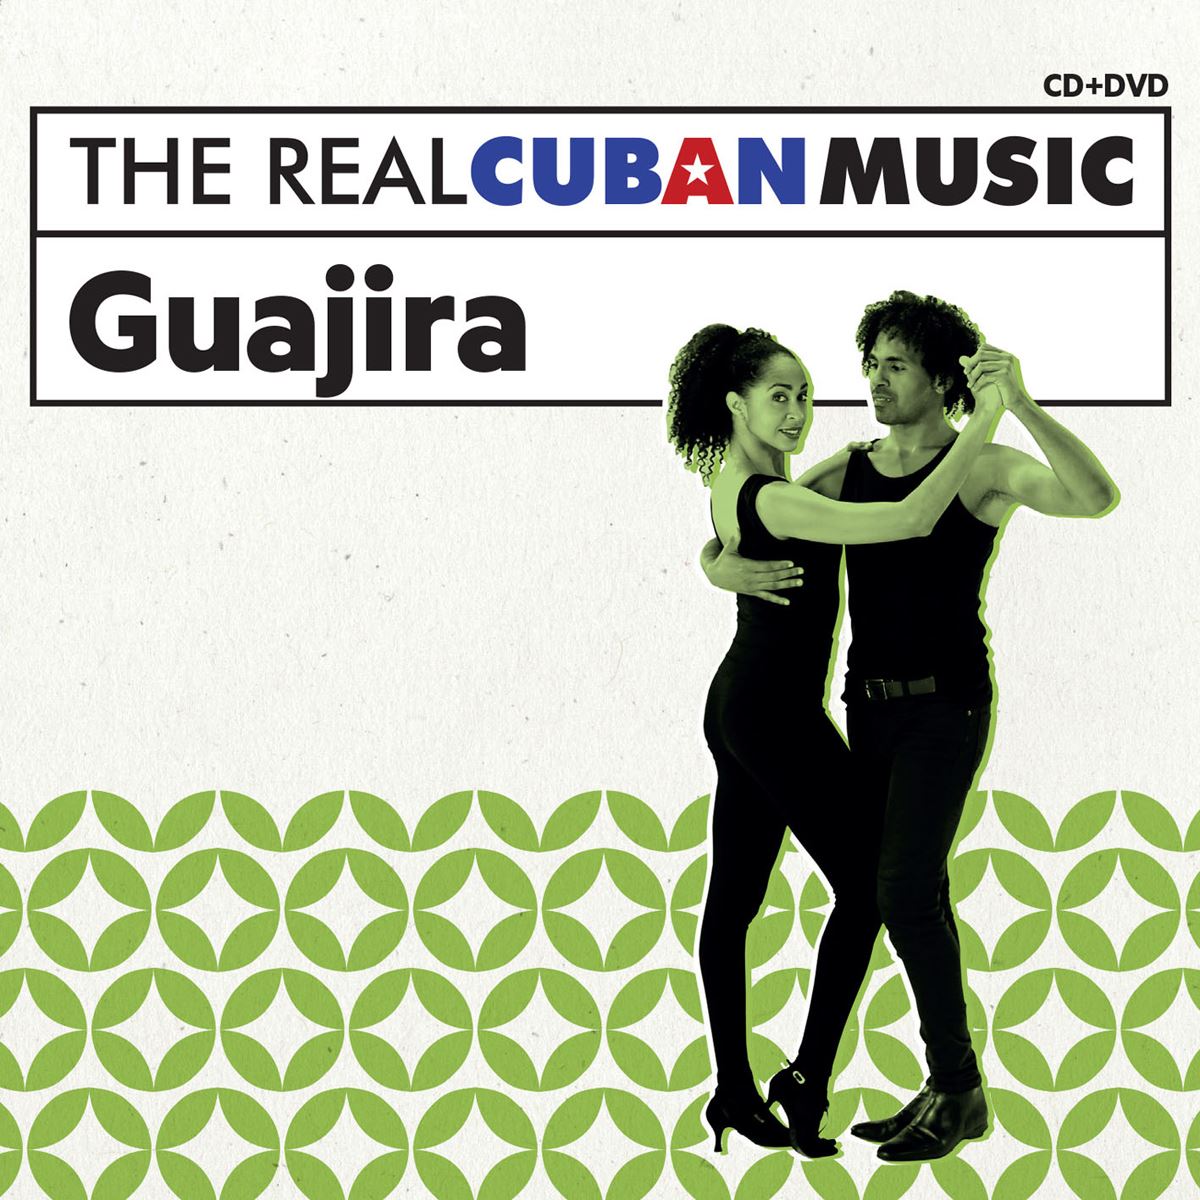 The Real Cuban Music: Guajira (Remasterizado) Ntsc Version